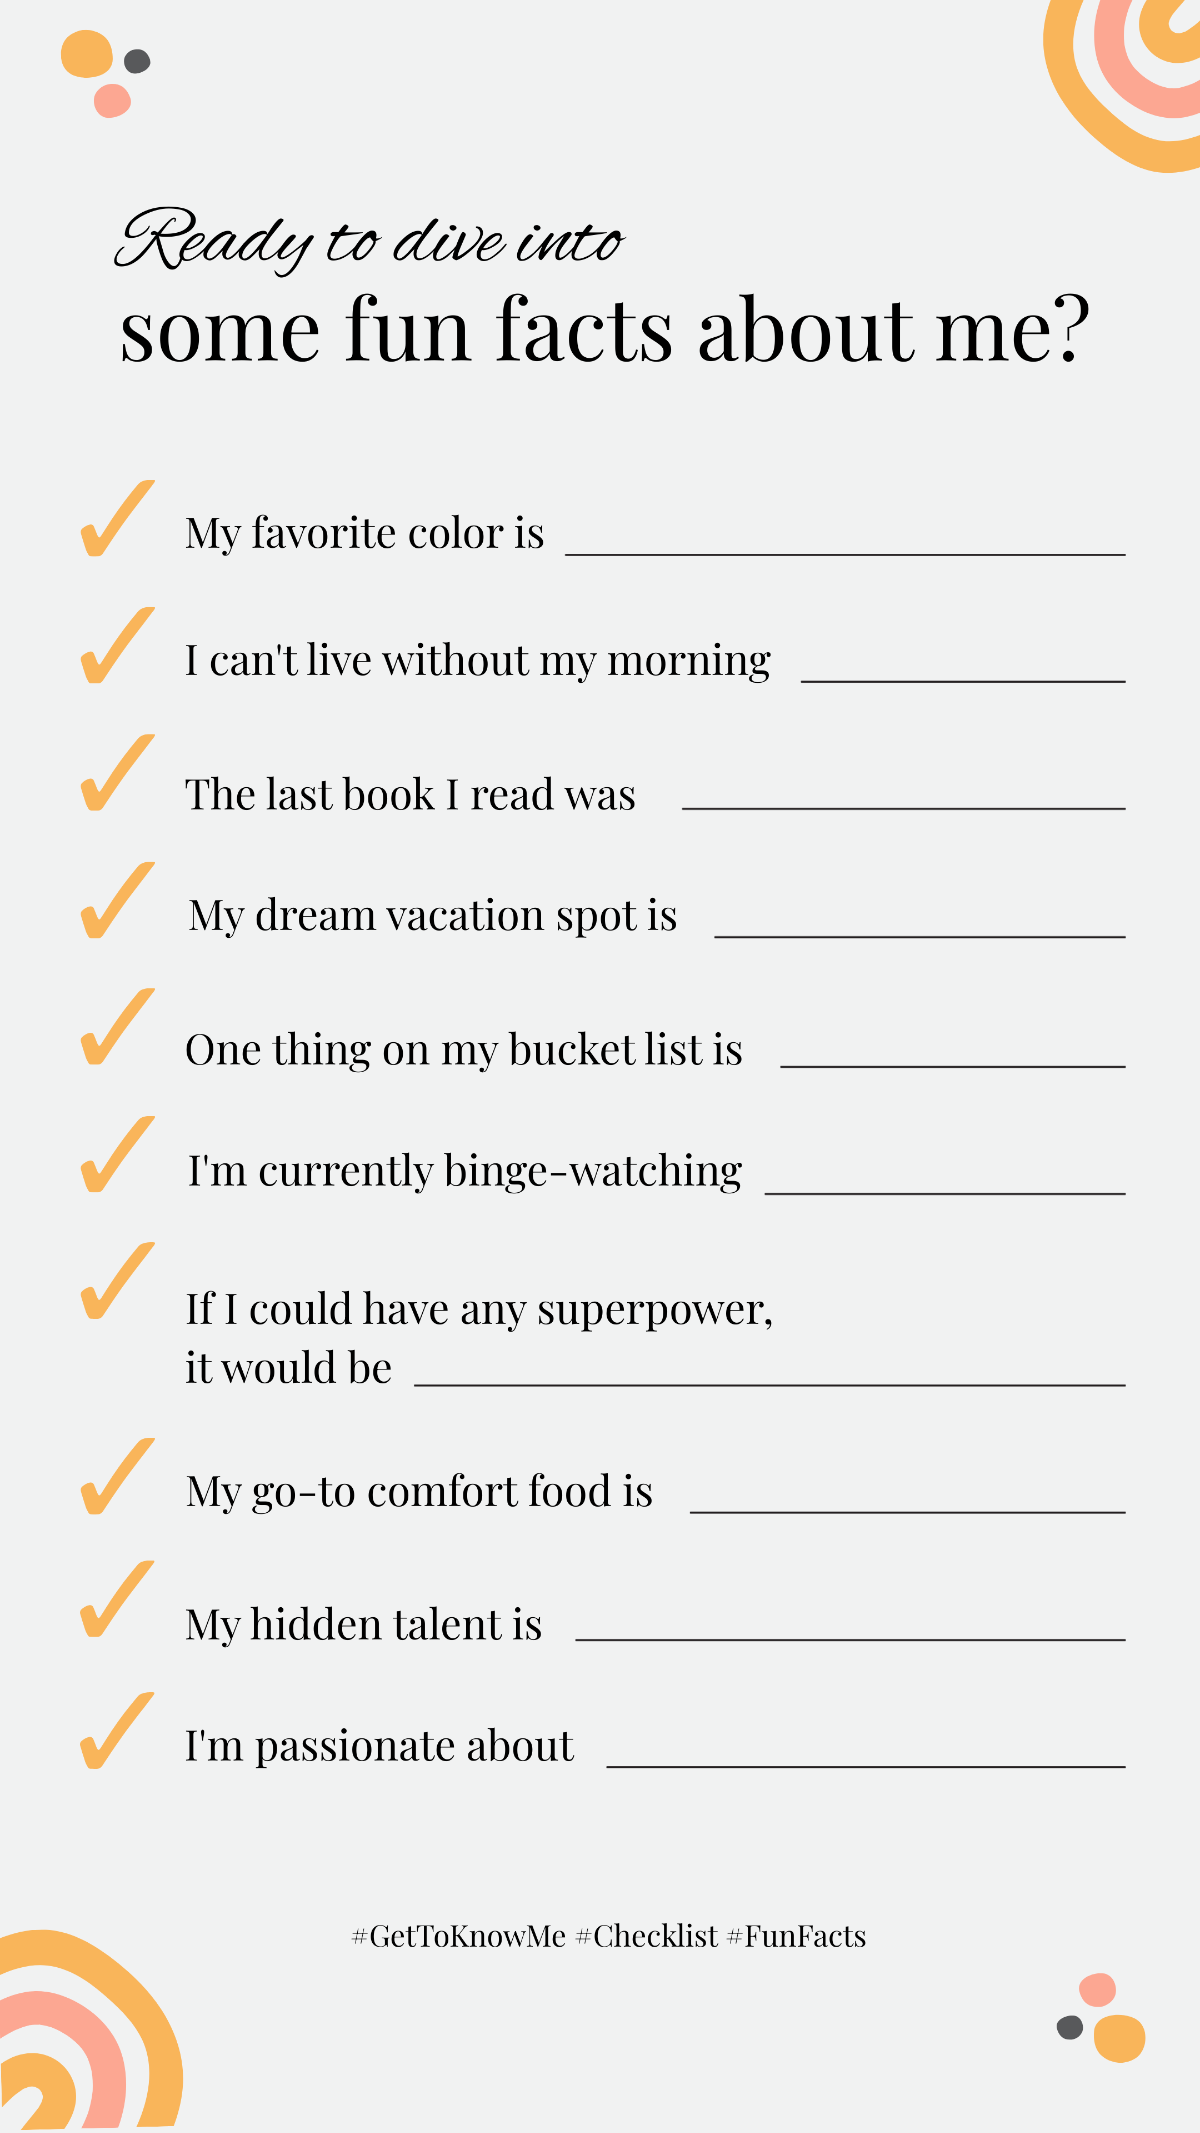 Meeting Get to Know Me Checklist Instagram Quiz